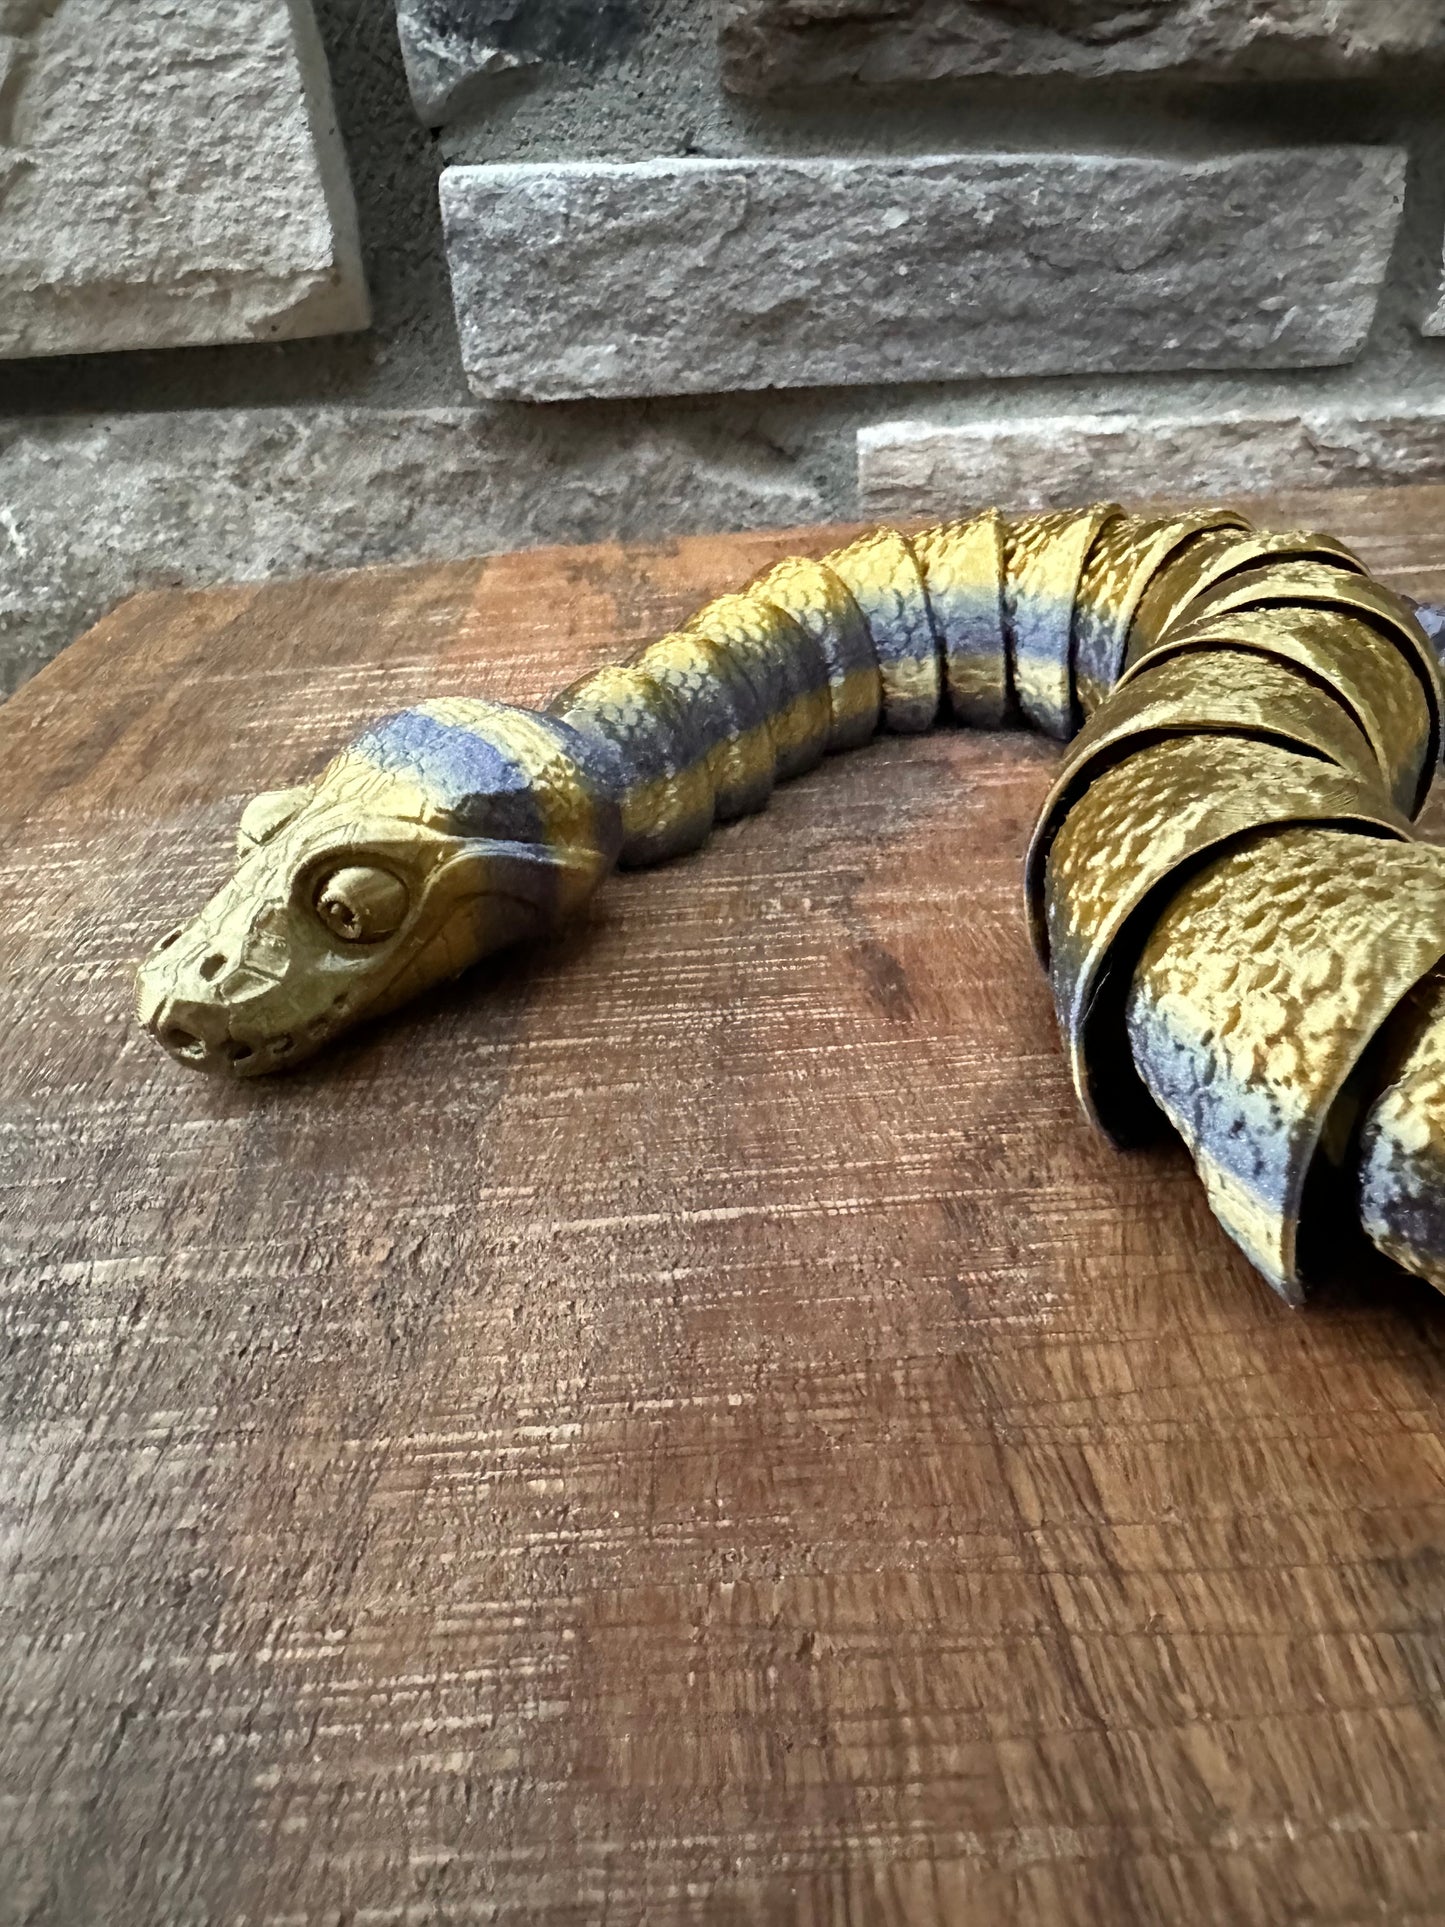 Large Ball Python | 3D Printed | Articulated Fidget | Custom Figurine